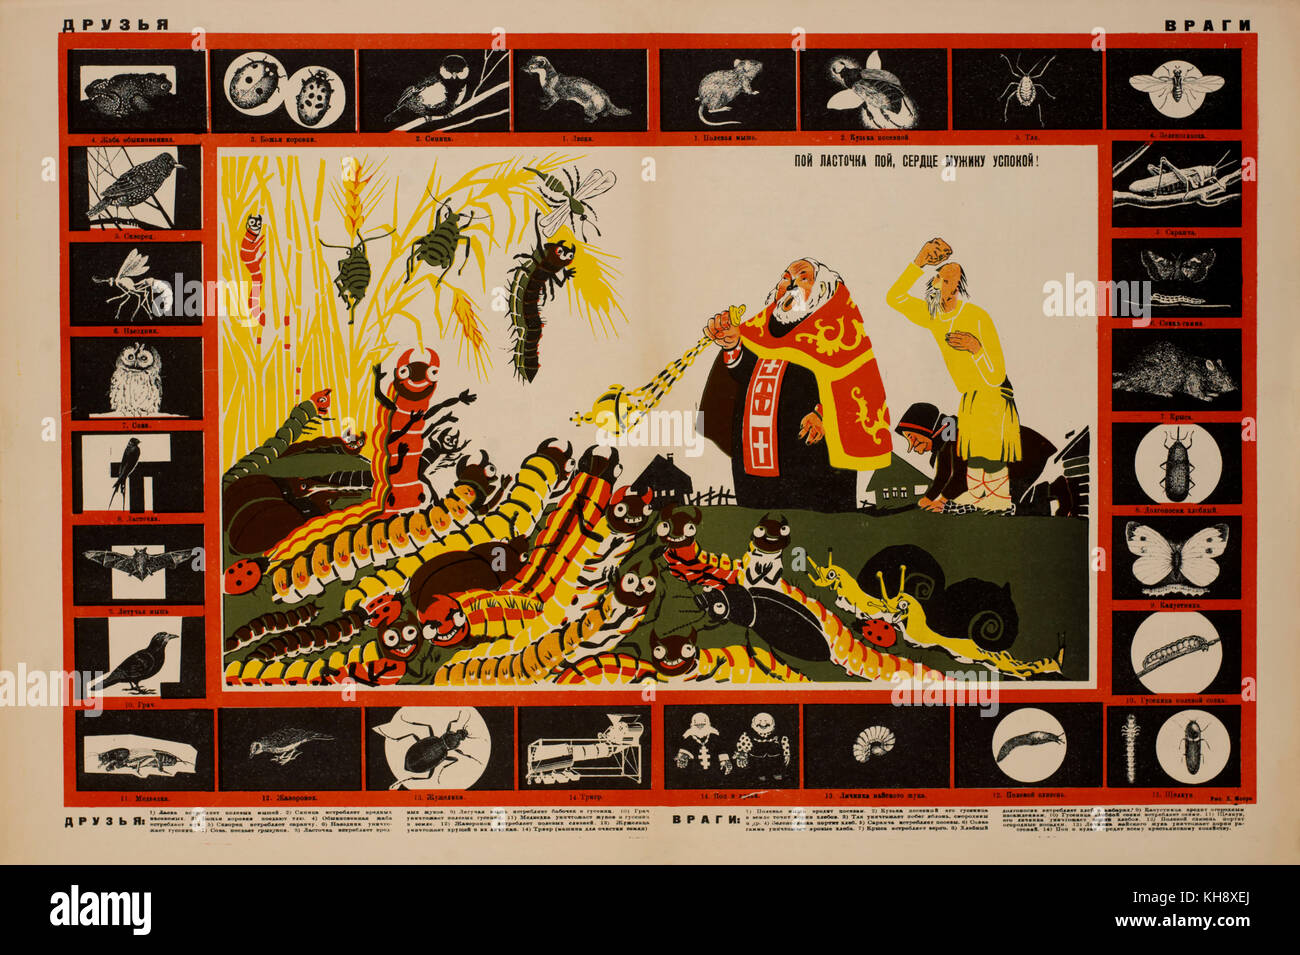 Affiches de propagande anti-religion, bezbozhnik u stanka magazine, illustration par Dimitri Moor, Russie, 1920 Banque D'Images